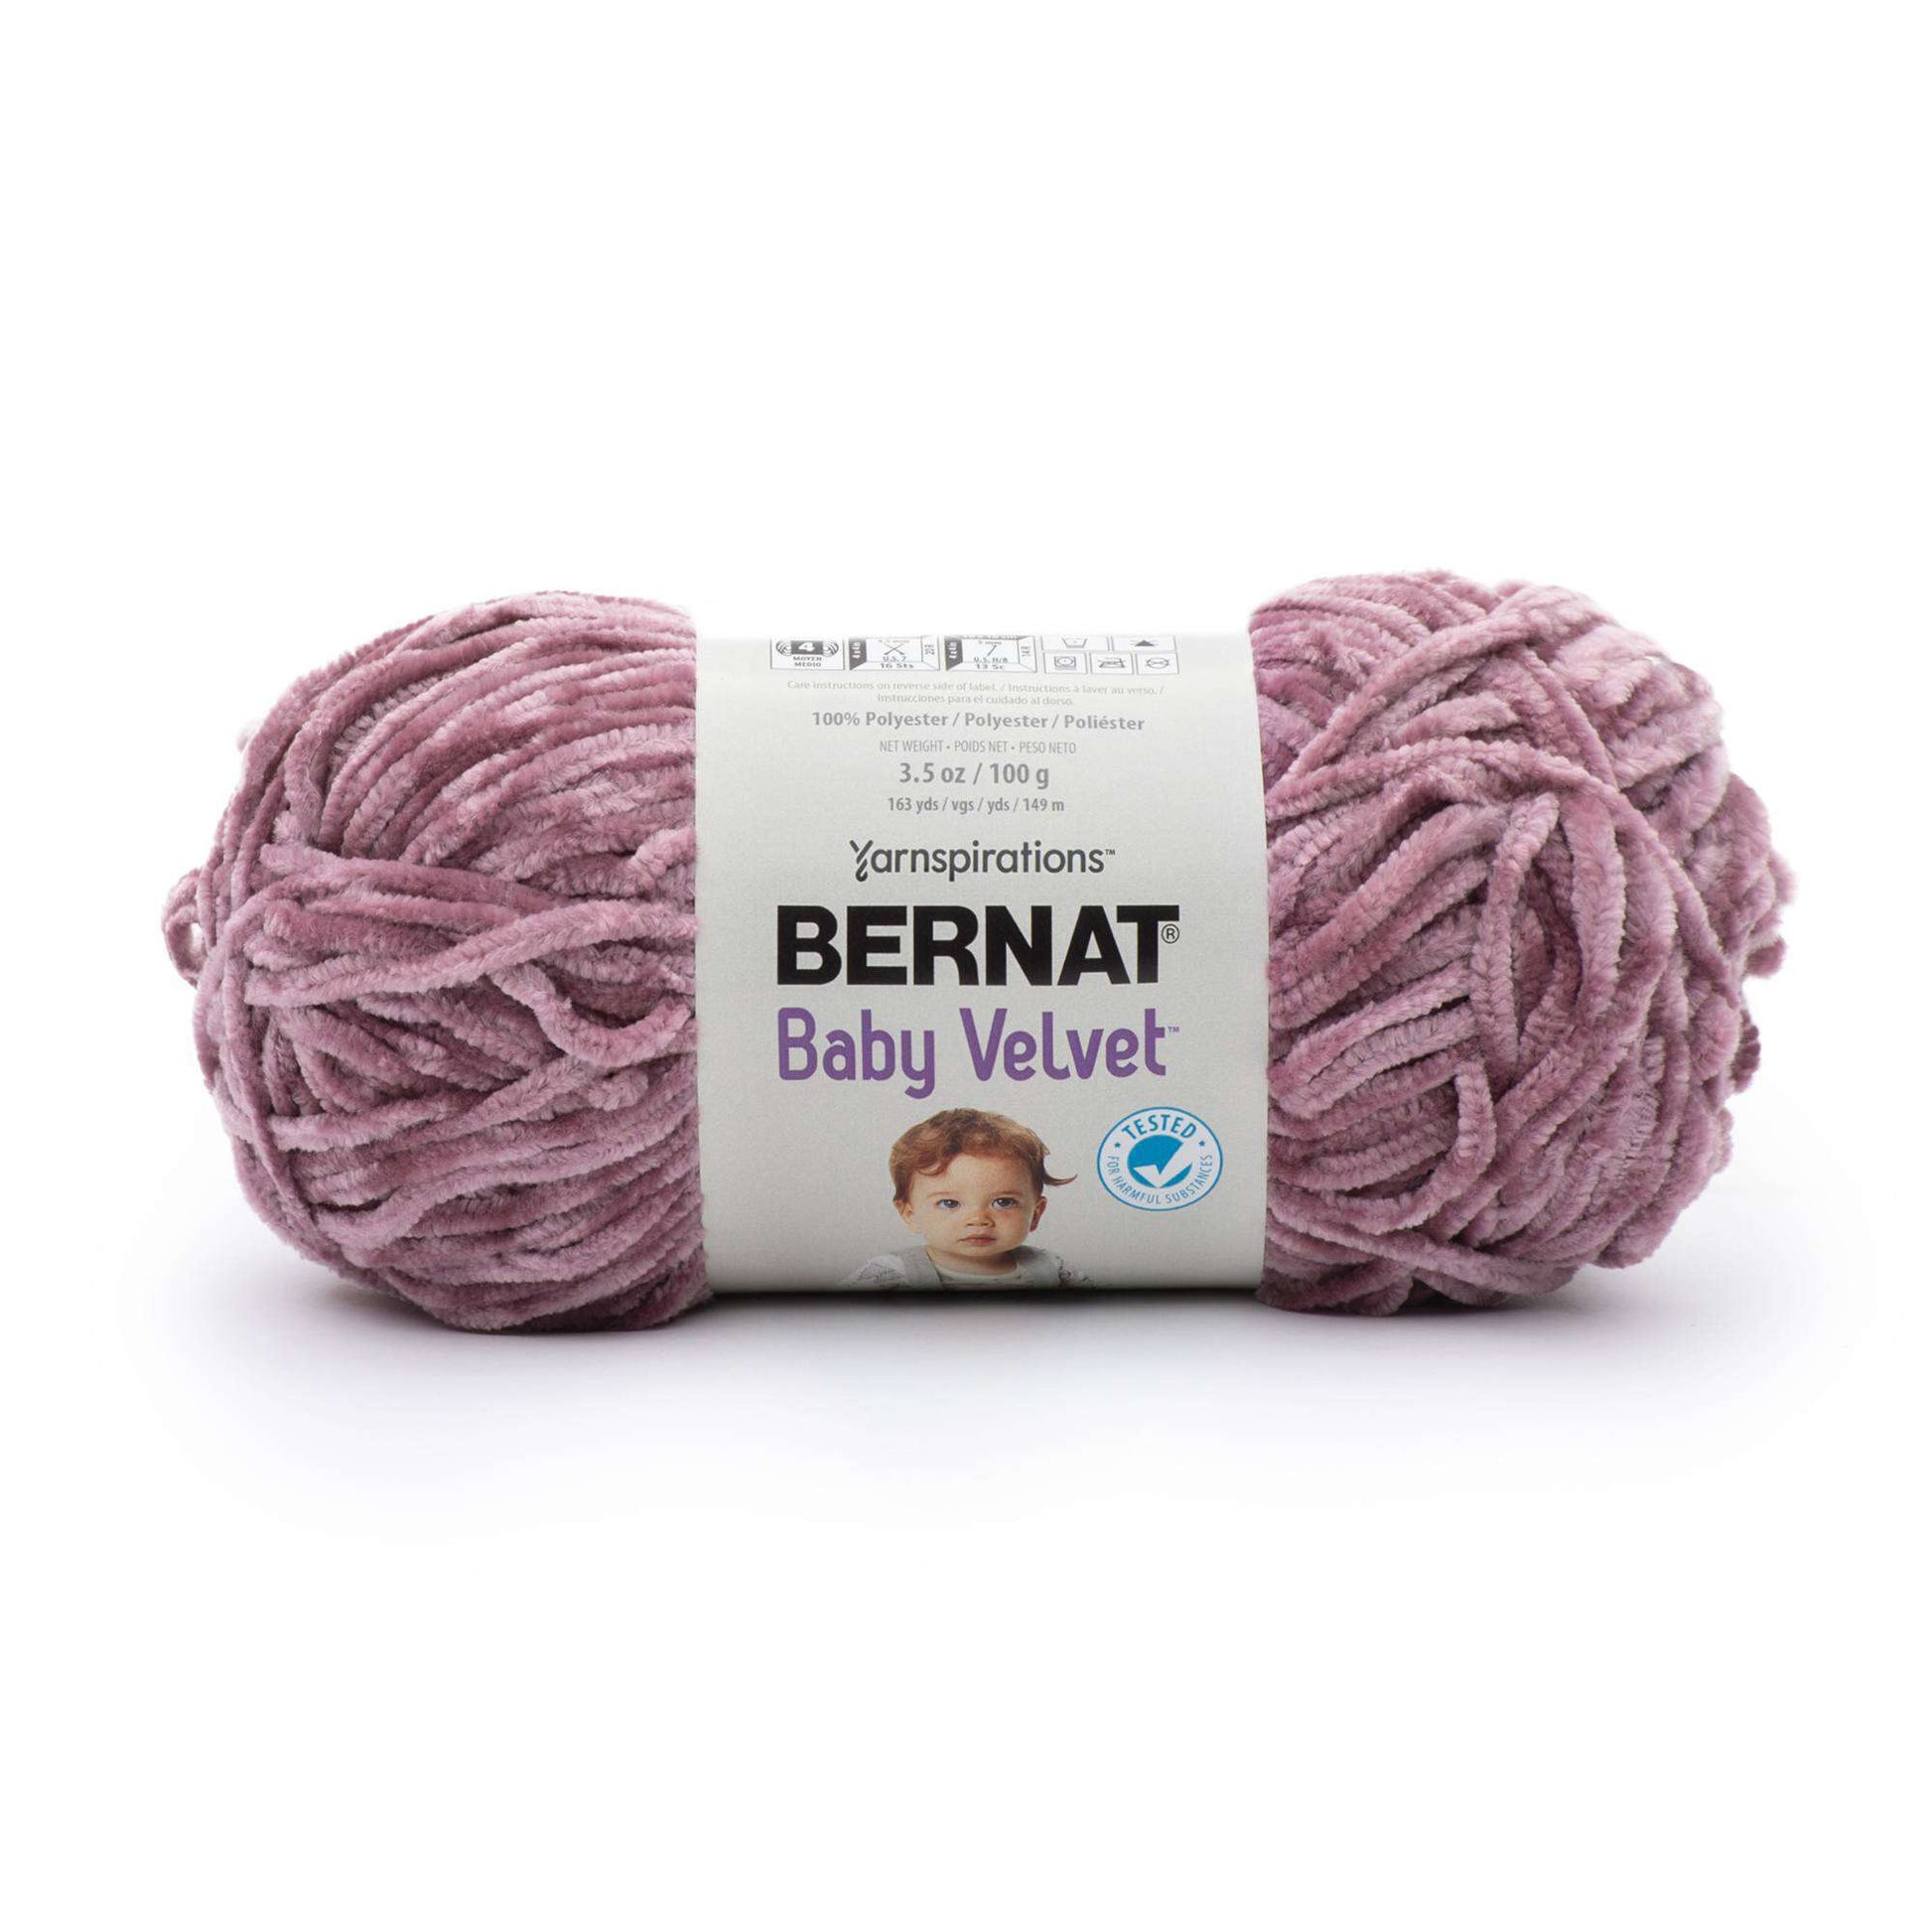  Bernat Baby Velvet Yarn - 3.5 Oz, Fairy Lavender - 3 Pack  Bundle with Bella's Crafts Stitch Markers